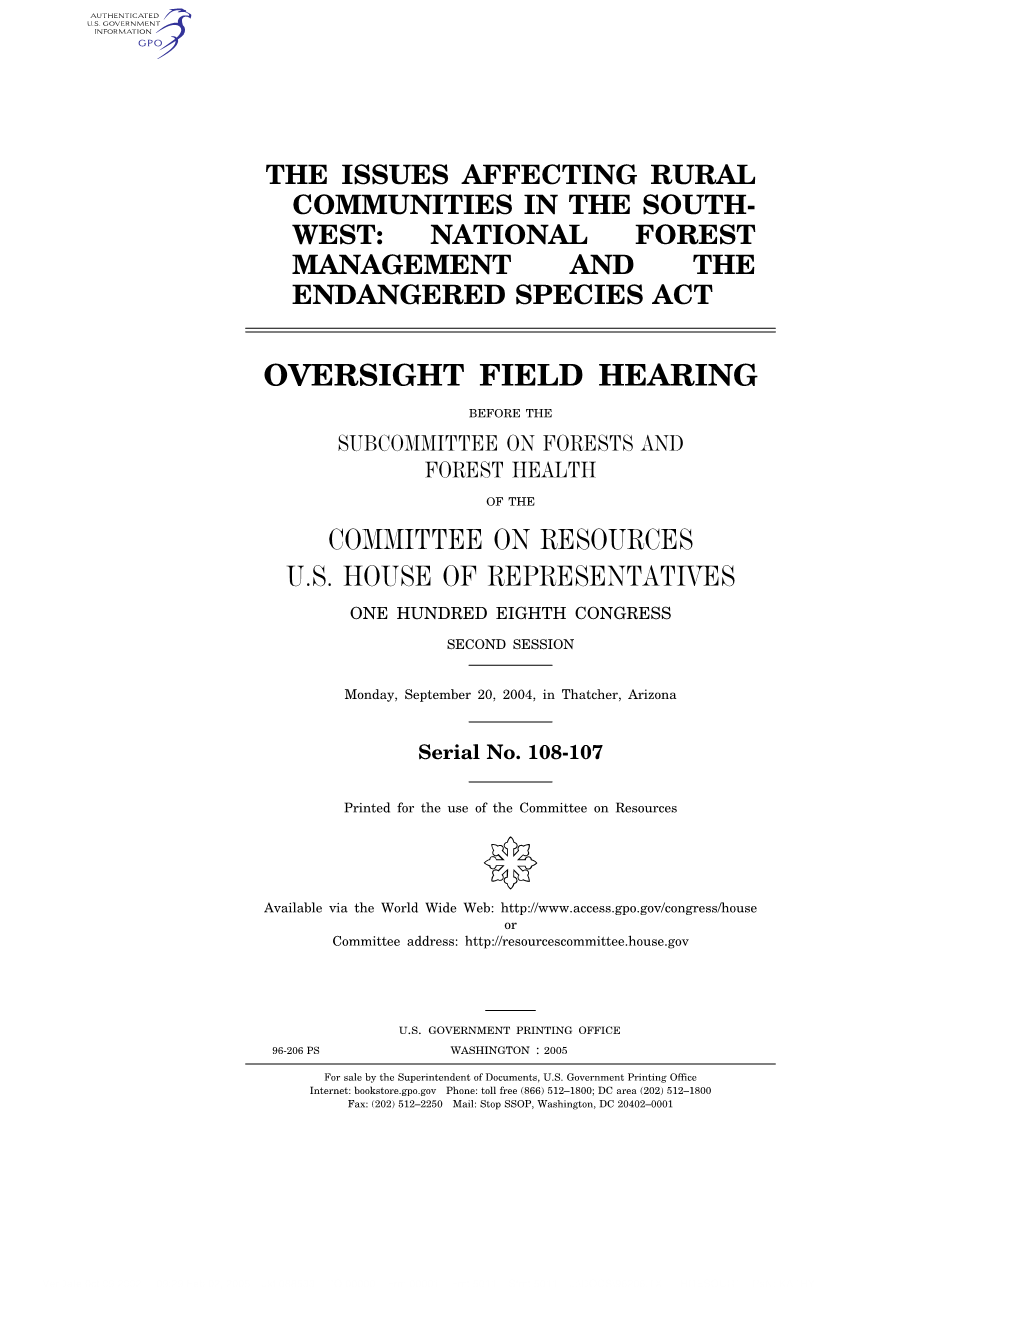 Oversight Field Hearing Committee On